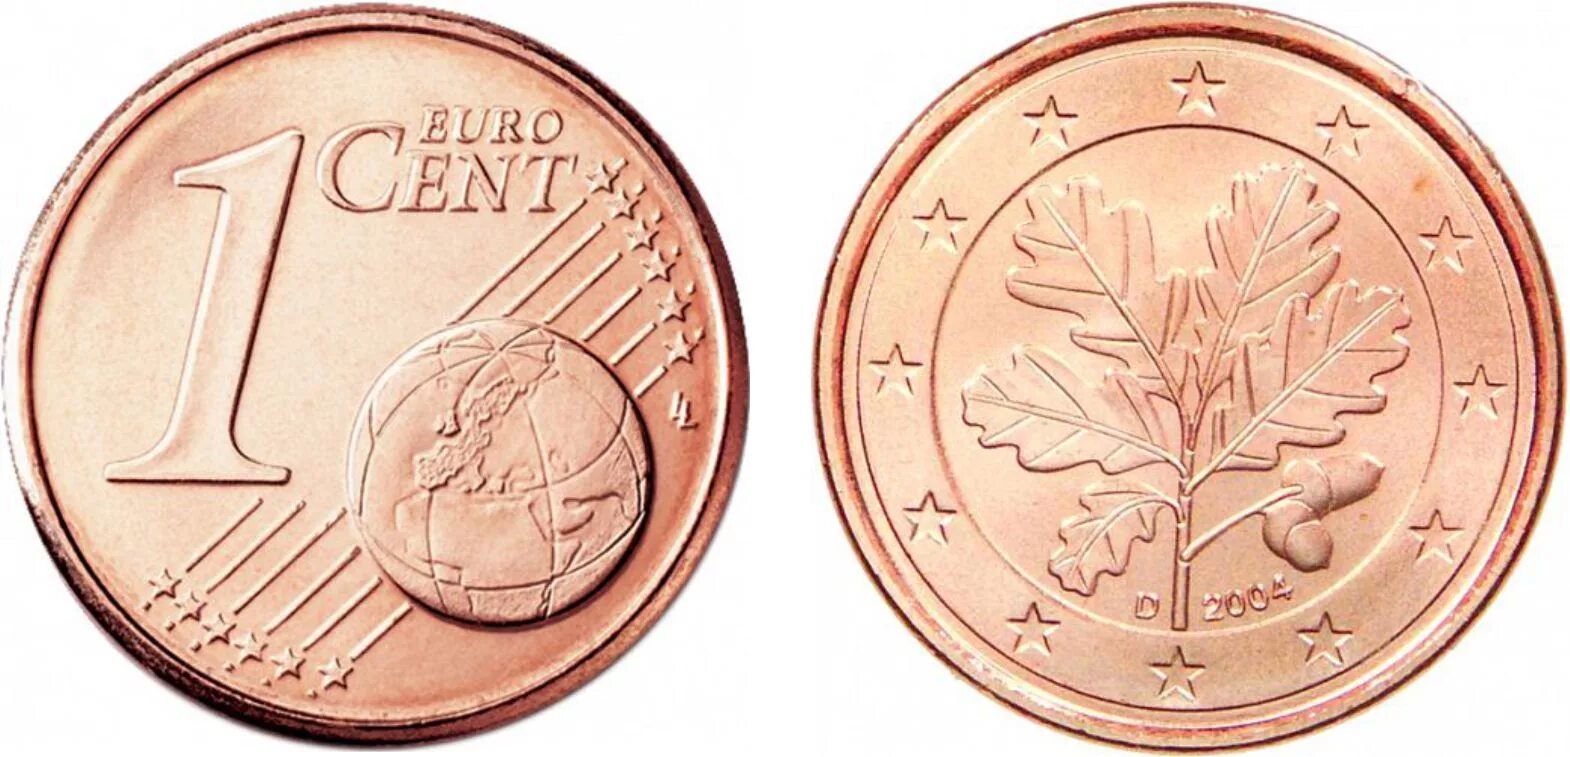 1 5 евро в рубли. Евро цент монета 2007. 2 Евро цента монета. Монета 2007 5 Euro Cent. 1 Euro Cent 2004 a Германия.